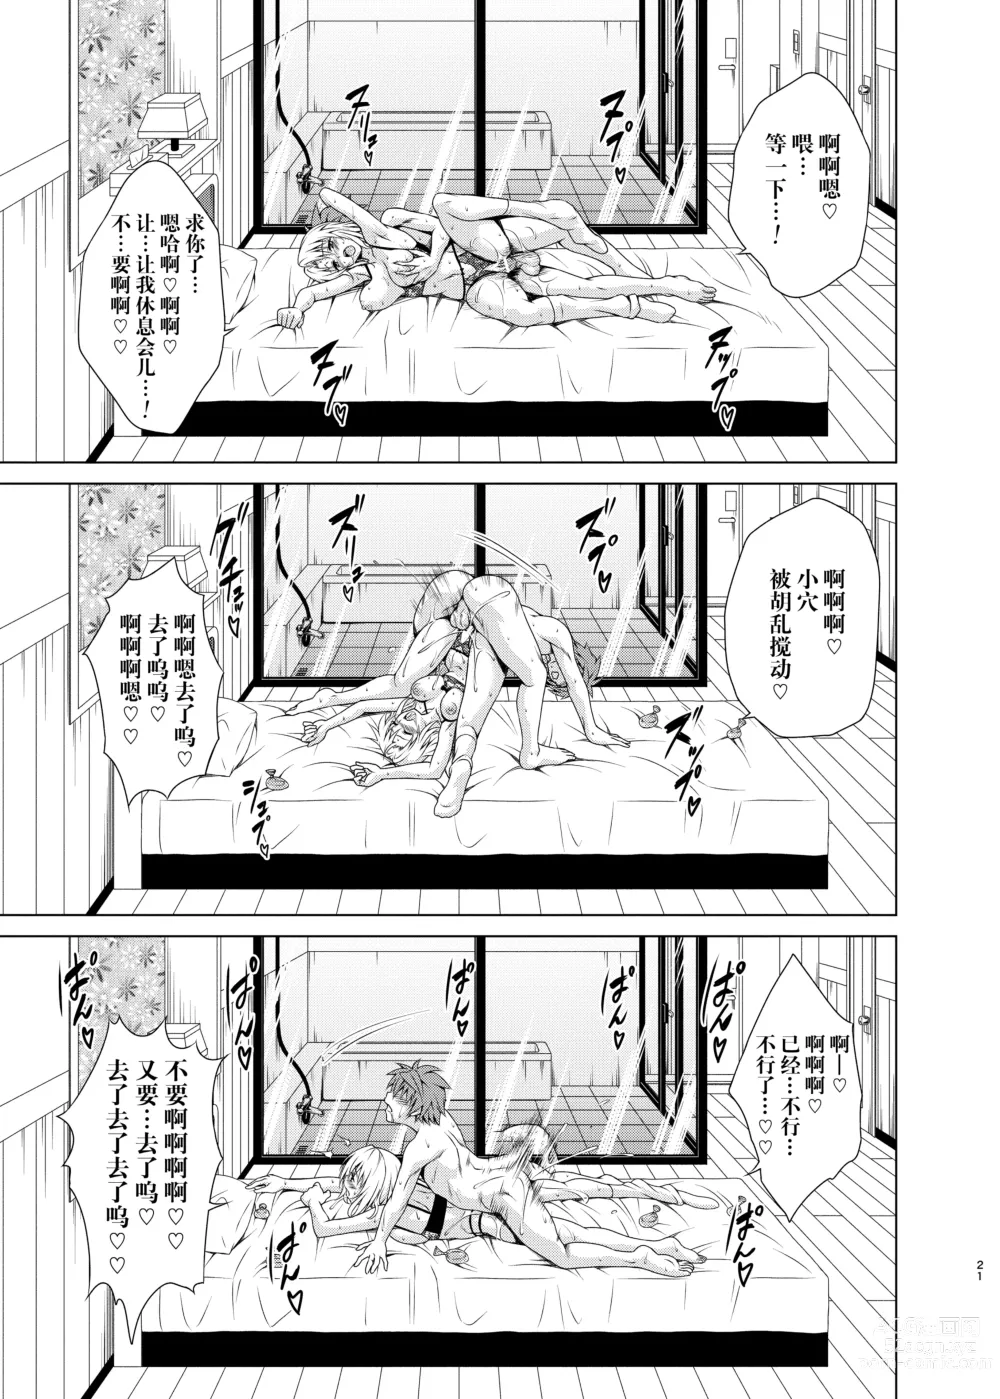 Page 21 of doujinshi Mezase! Harem Keikaku RX vol. 3